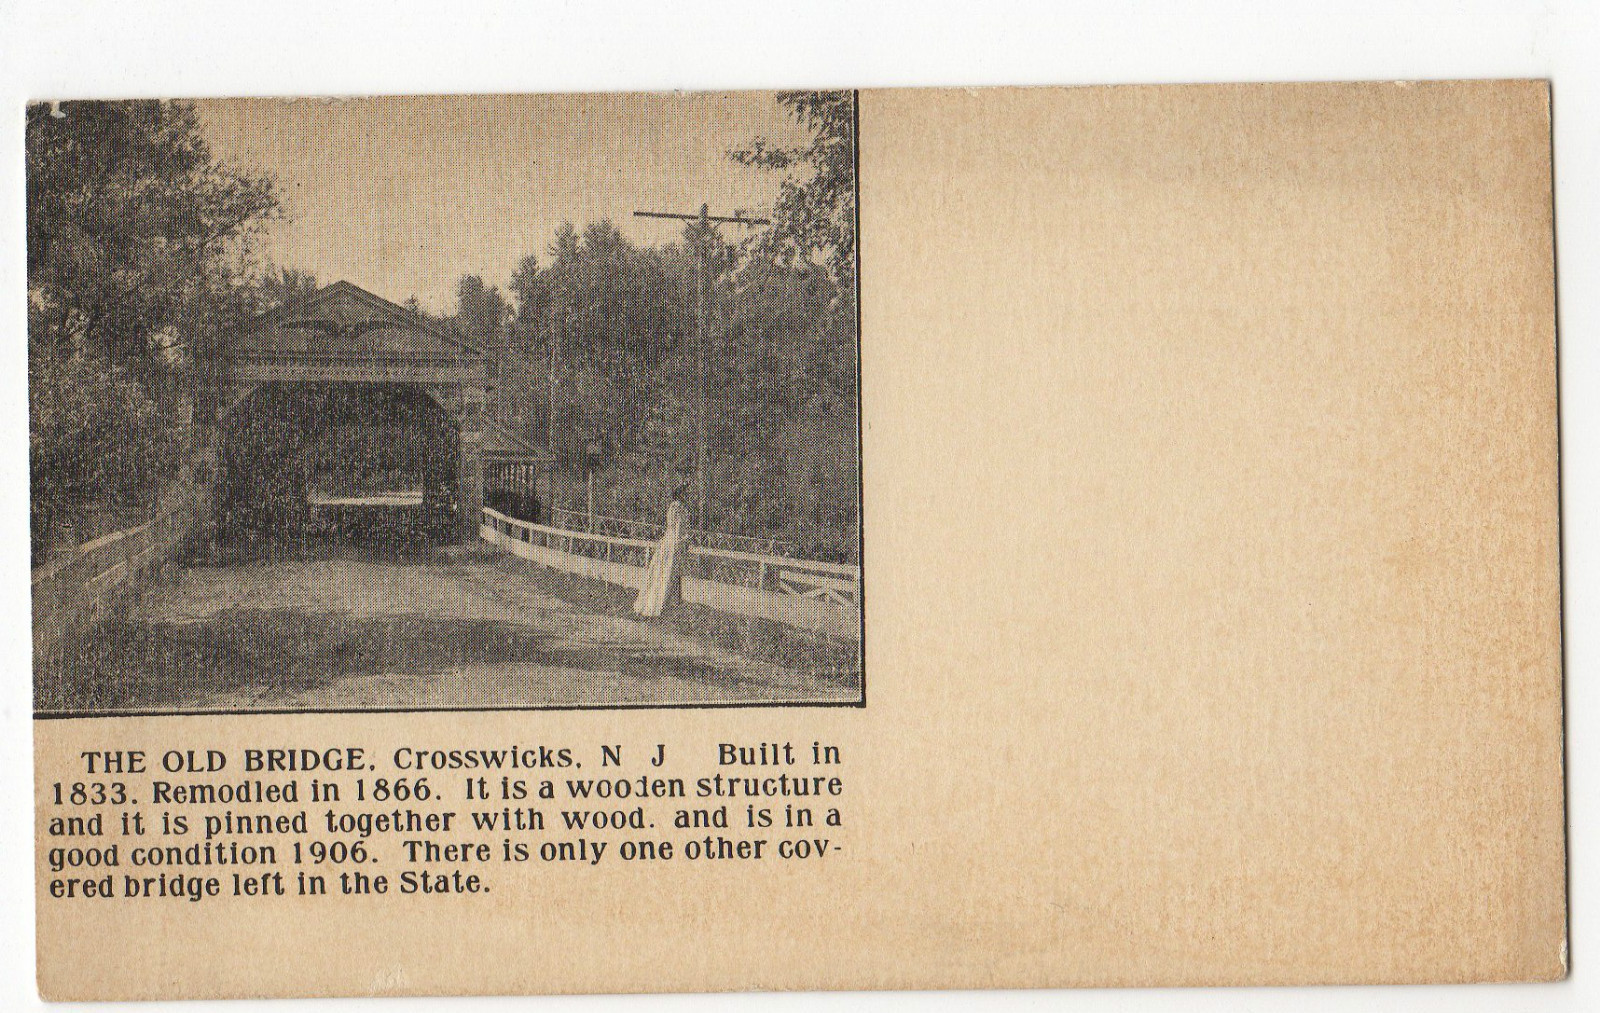 Crosswicks - head on view of the old covered bridge - 1908